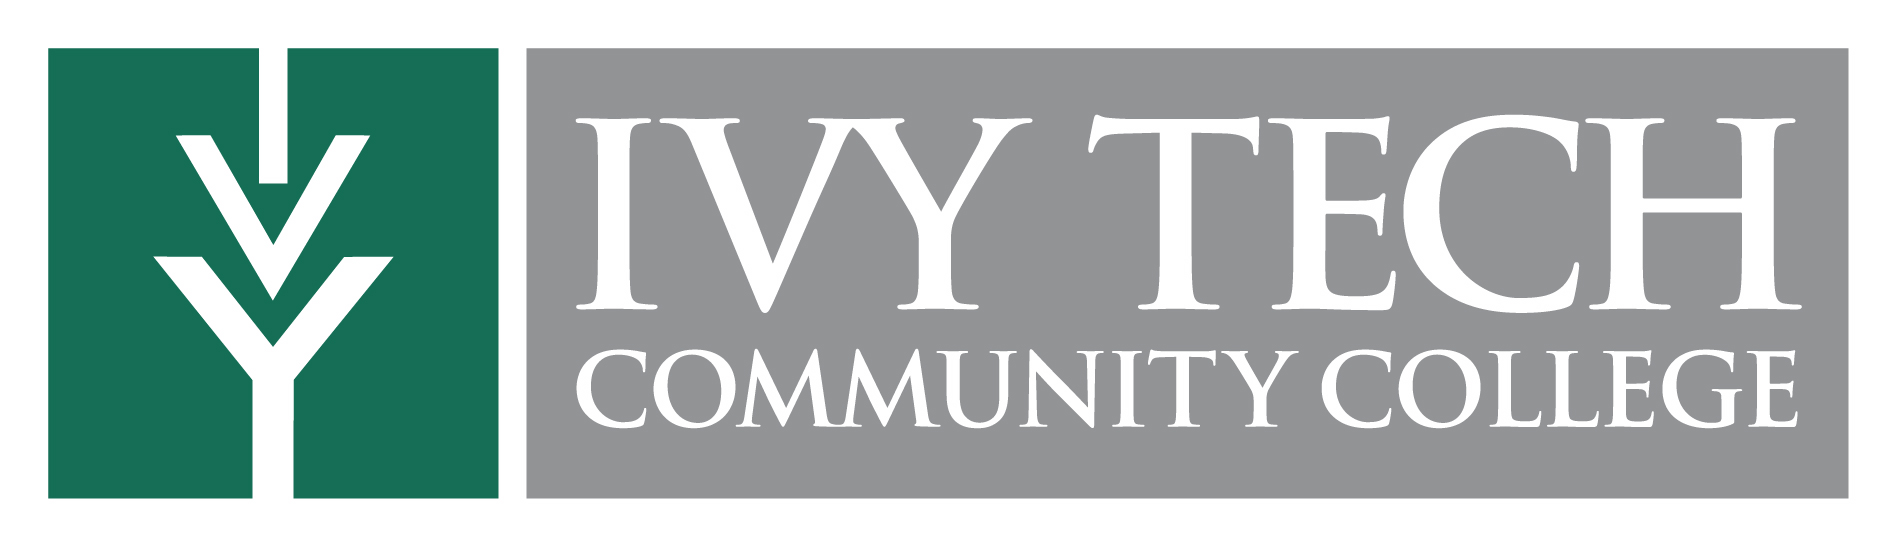 Ivy Tech Community College logo.